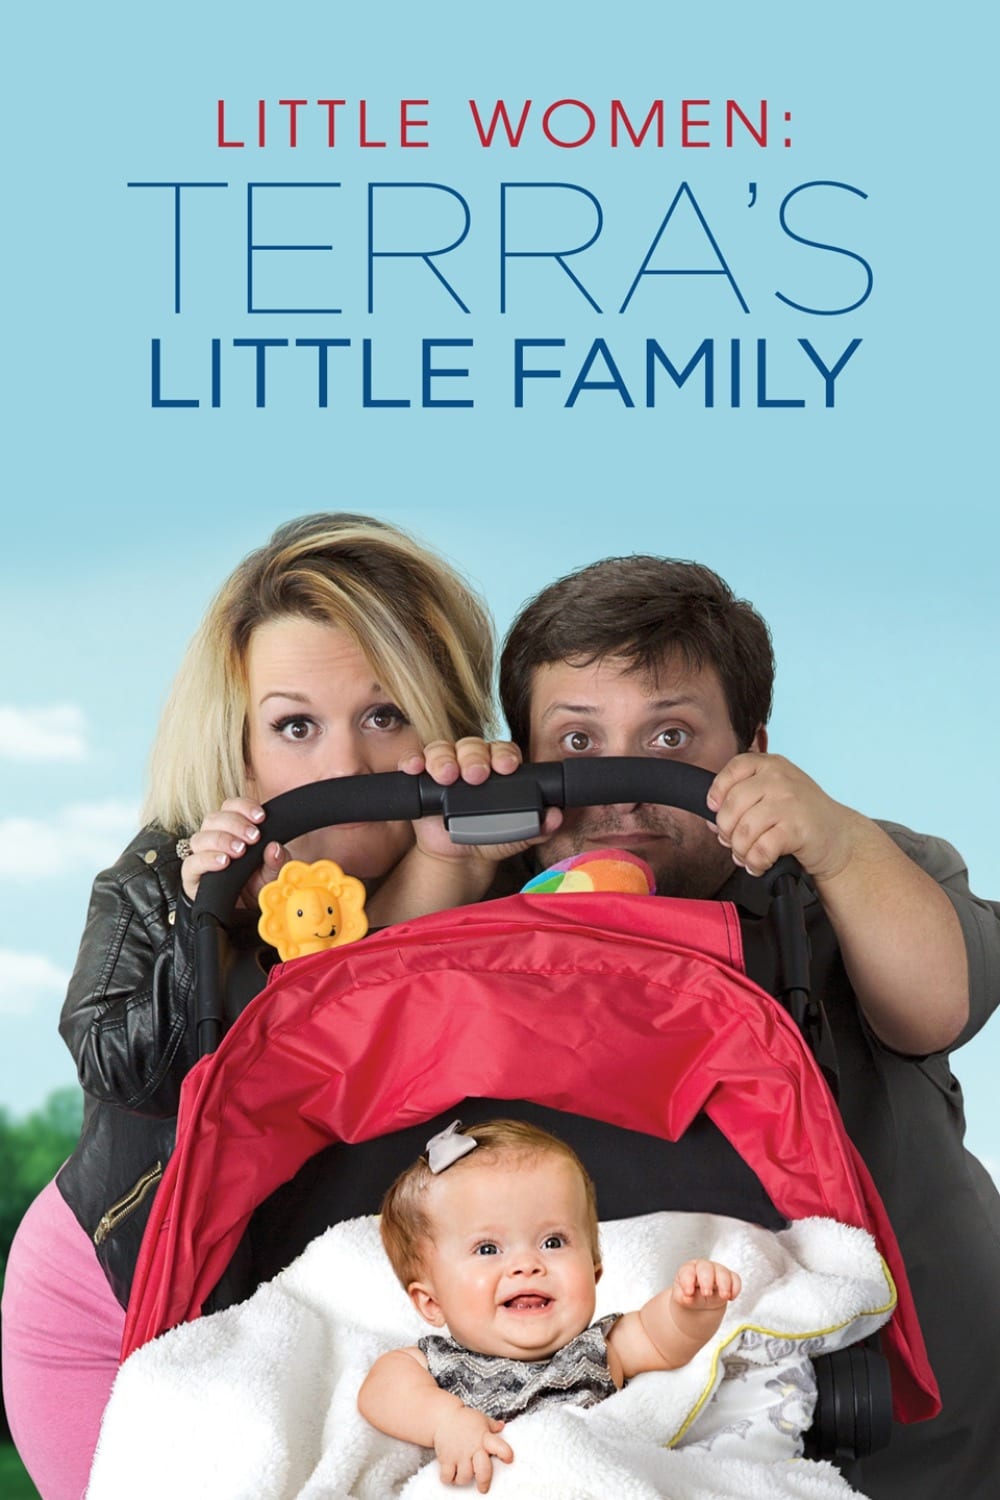 Little Women: Terra's Little Family